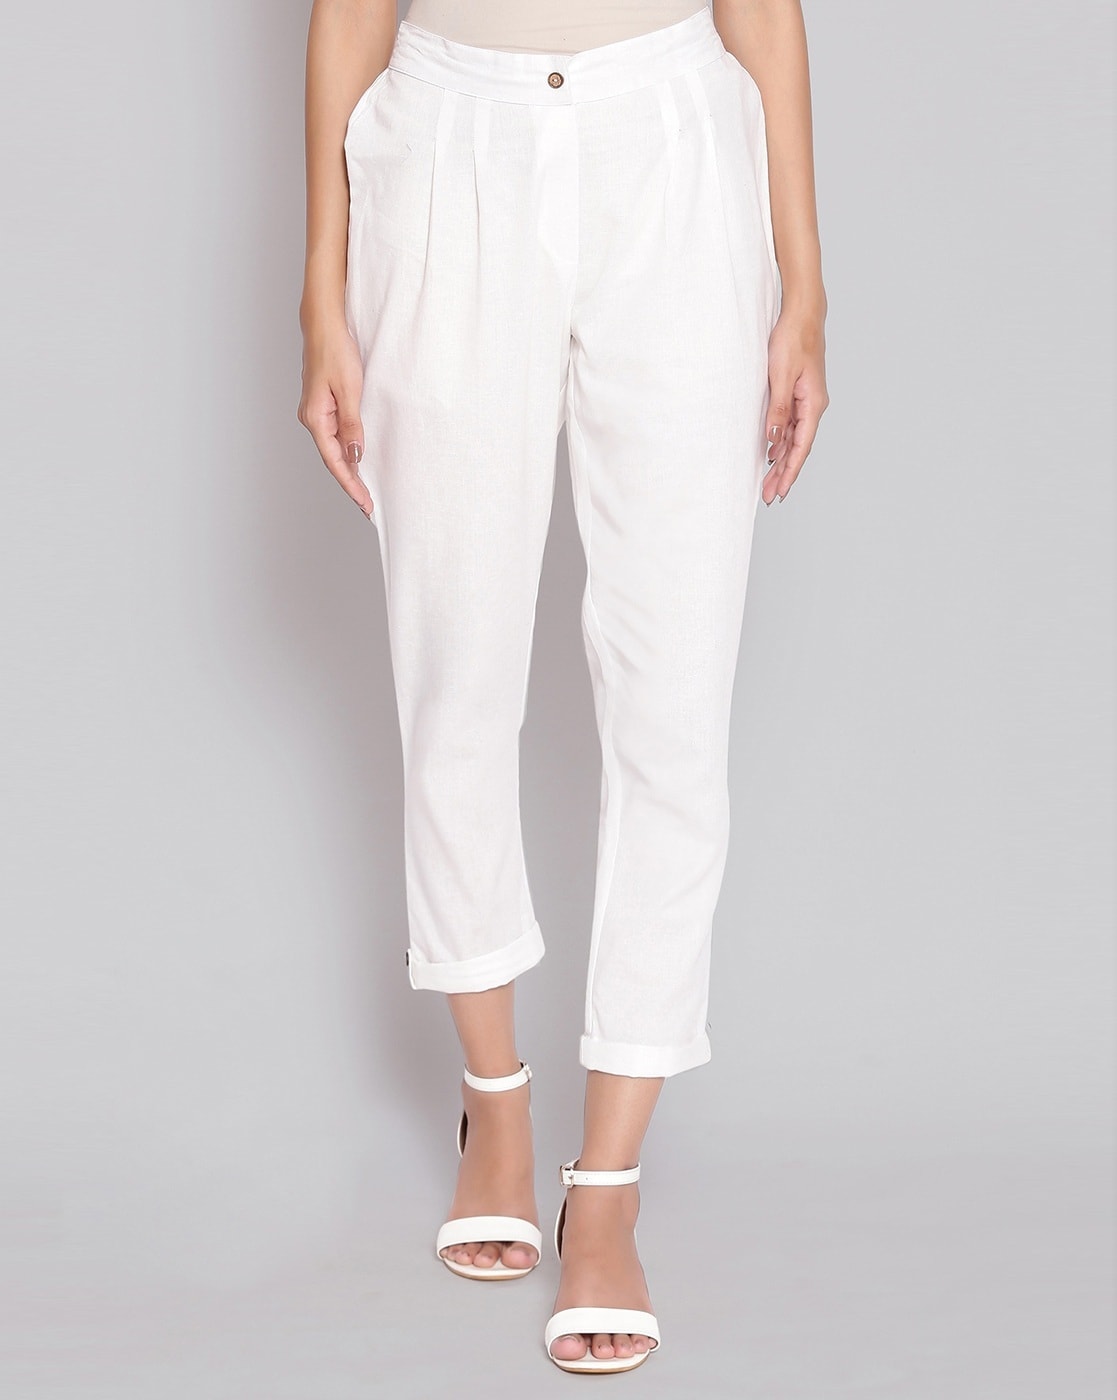 Buy White Trousers  Pants for Women by Myshka Online  Ajiocom